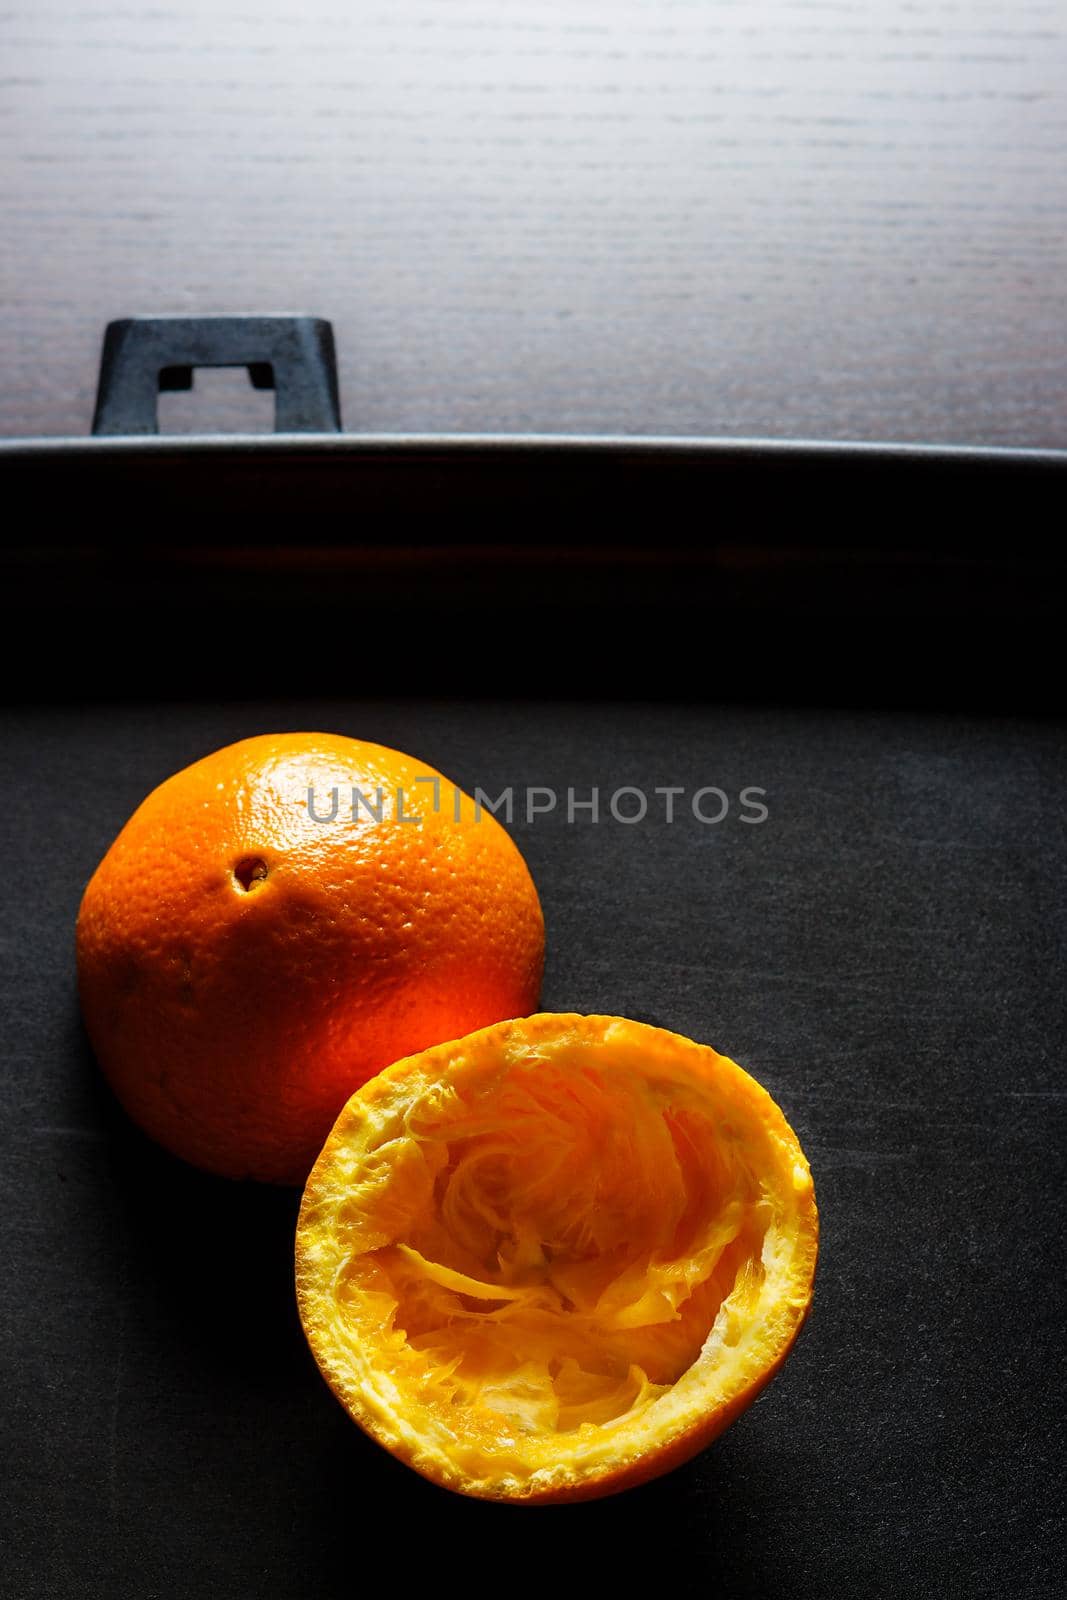 Used orange skins with dramatic light on black background. Vertical image.